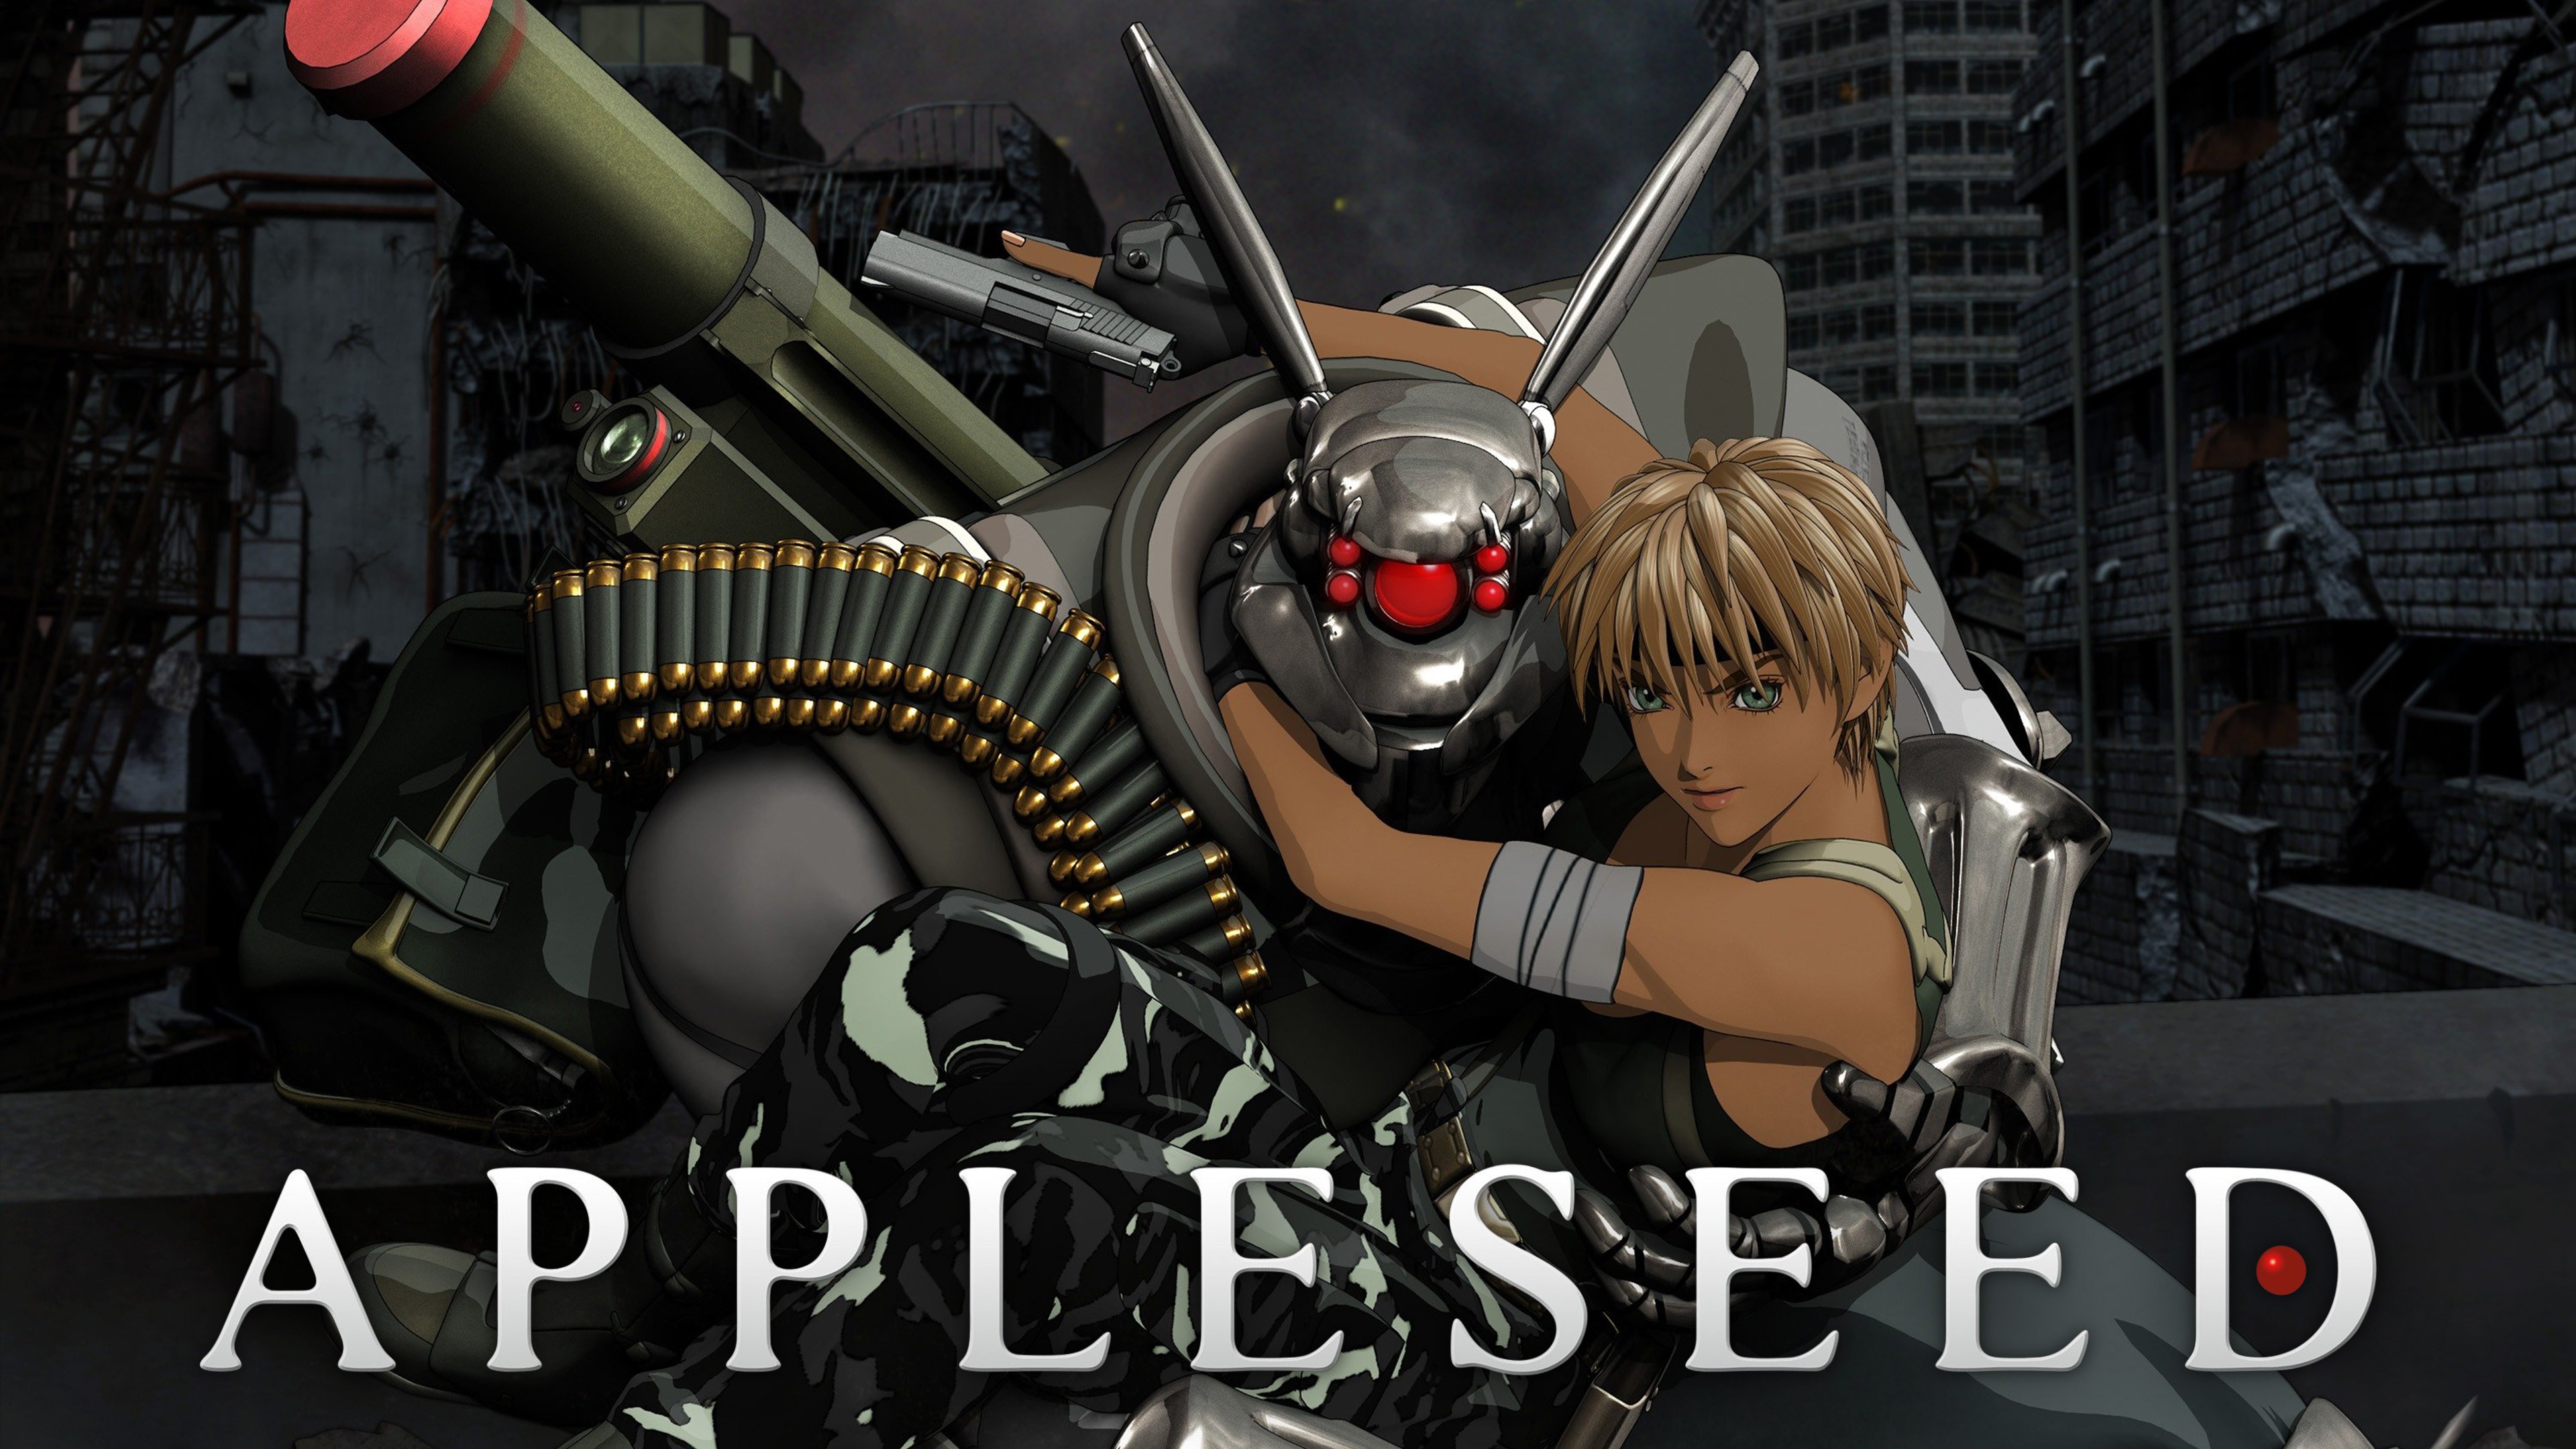 appleseed | Cyberpunk anime, Science fiction artwork, Manga artist